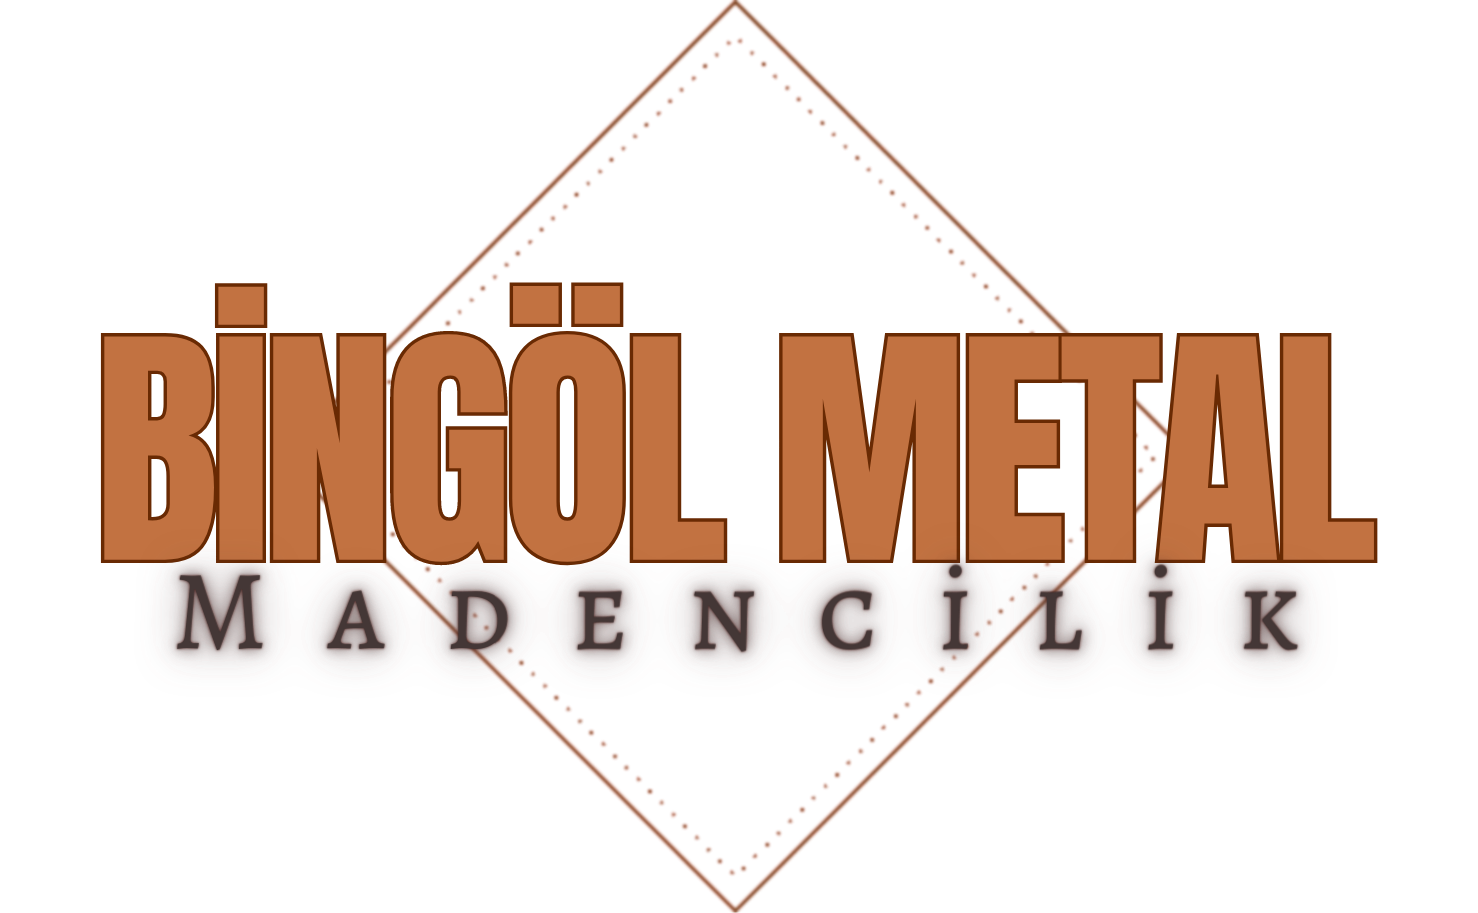 Bingöl Metal Madencilik San. ve Tic. AŞ.